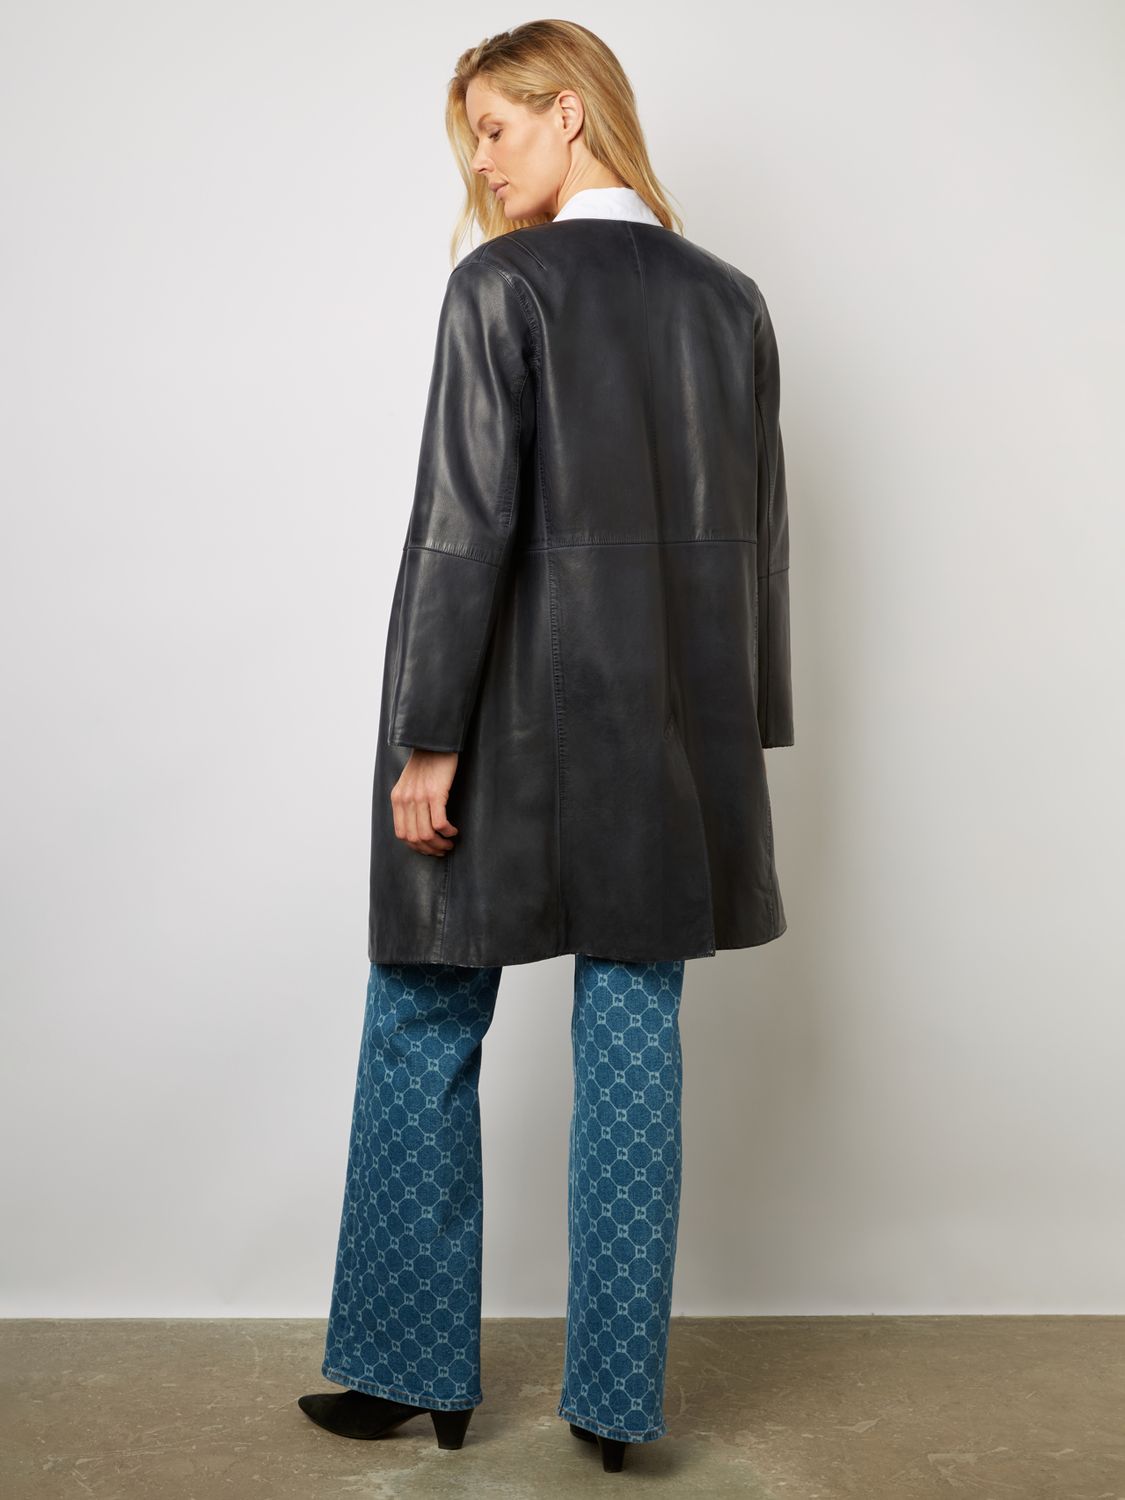 Buy Gerard Darel Jemima Long Leather Coat, Navy Online at johnlewis.com